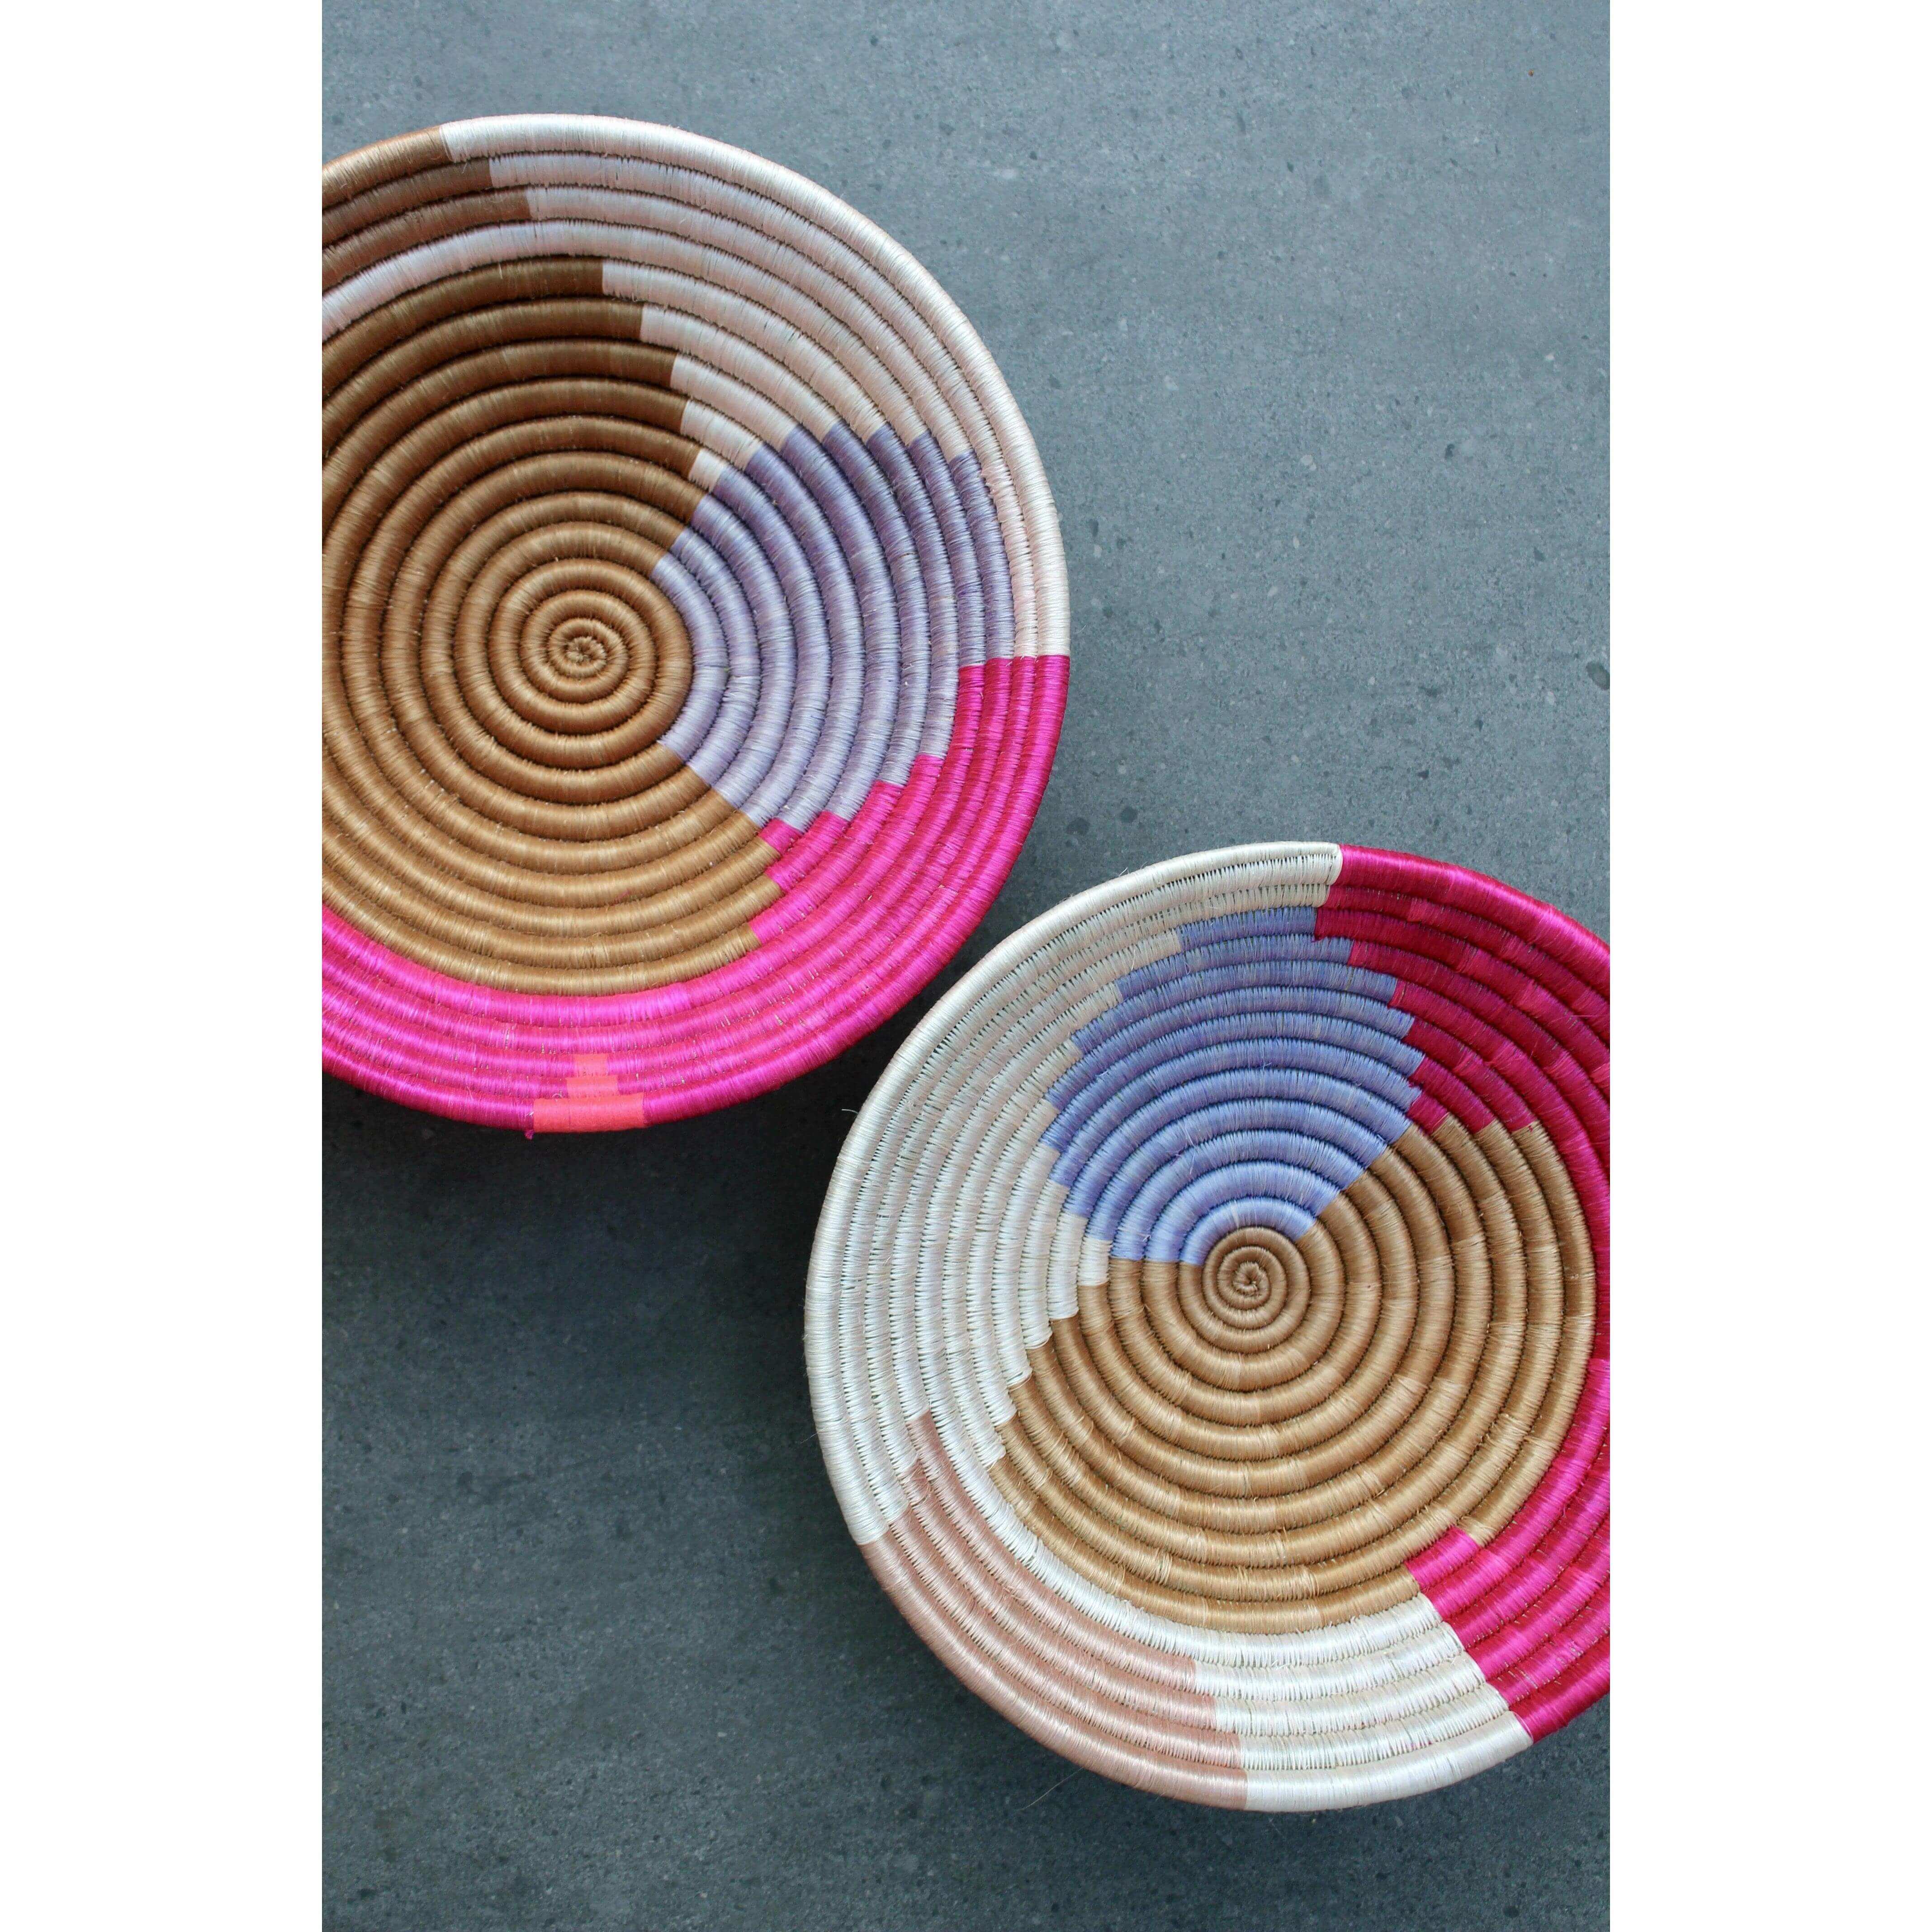 Artisan handmade fair trade seagrass bowls from Rwanda 